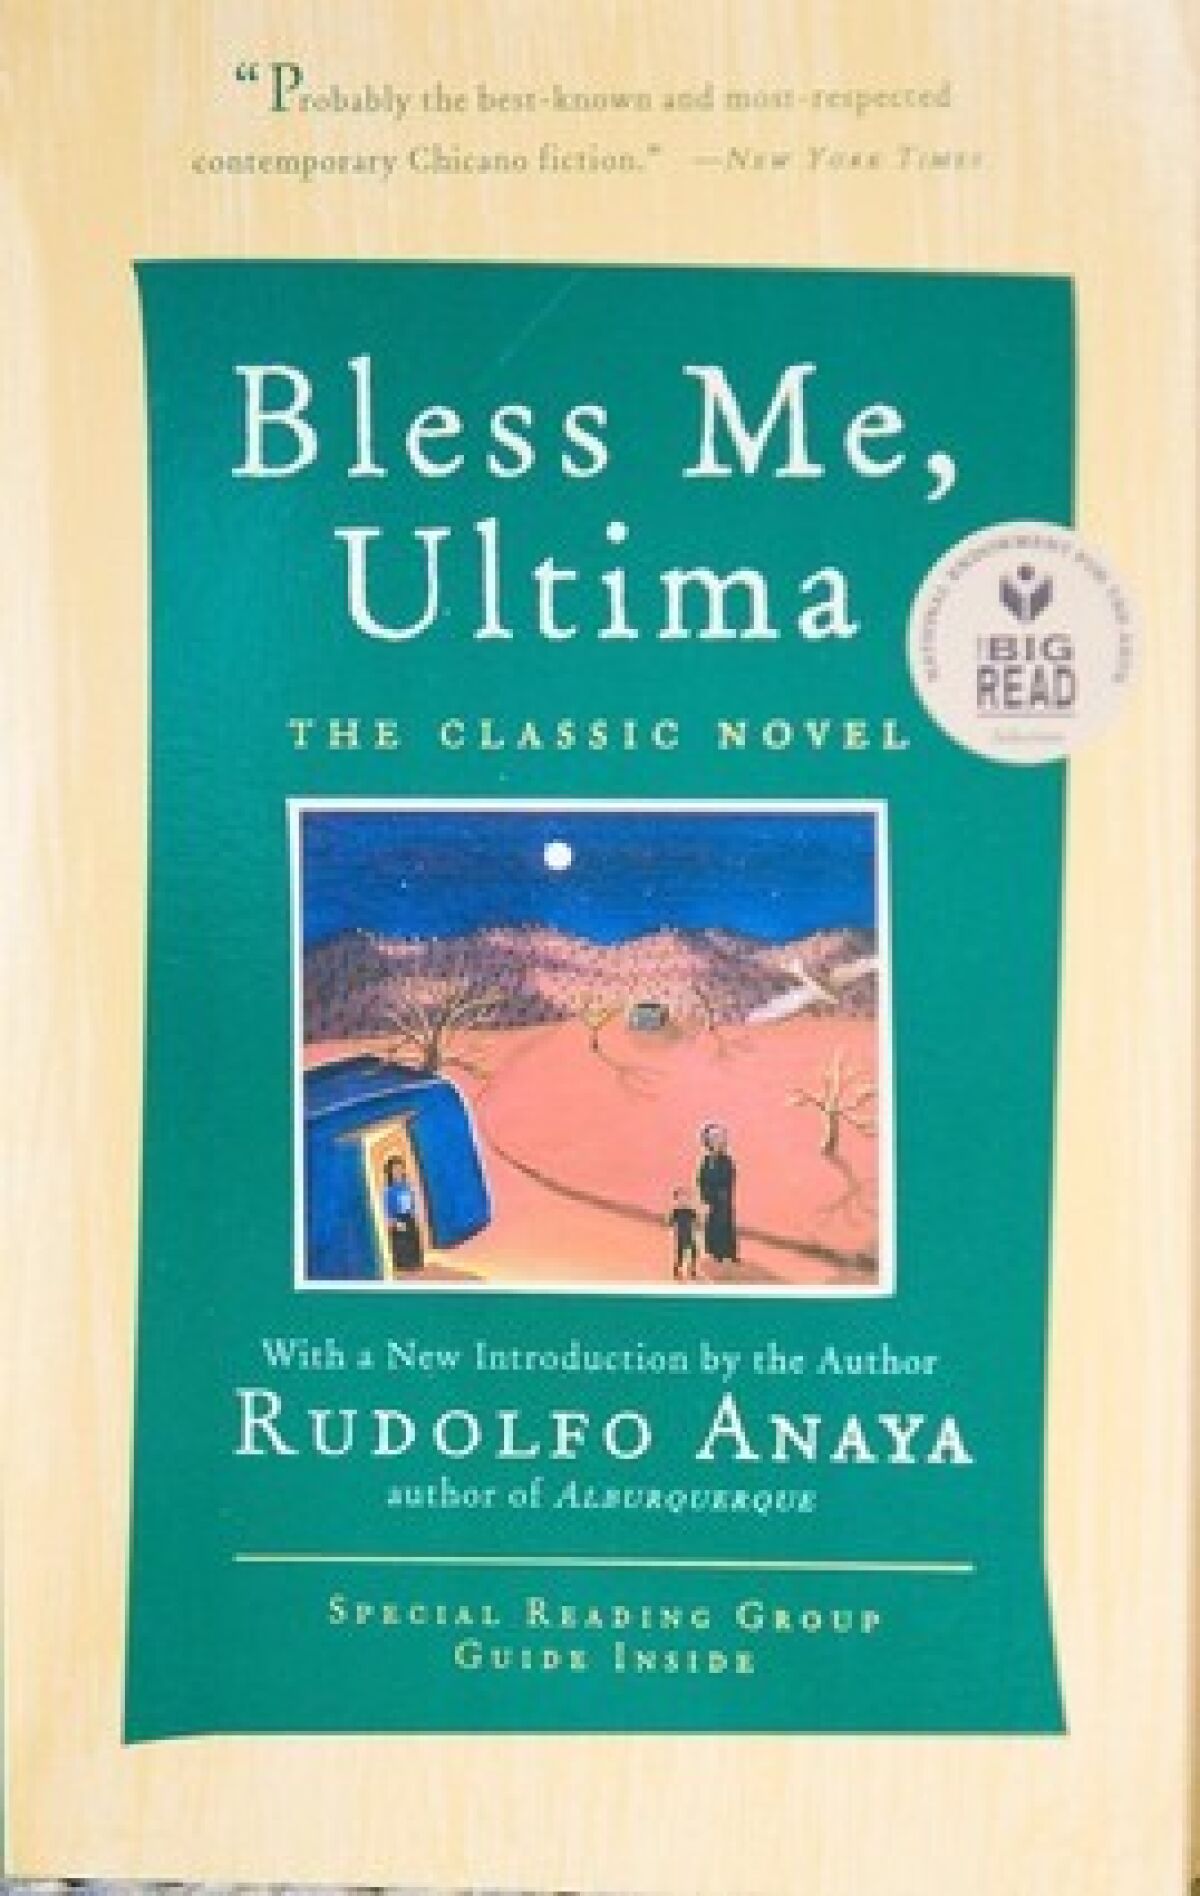 Rudolfo Anaya's 1972 coming-of-age novel "Bless Me, Ultima."